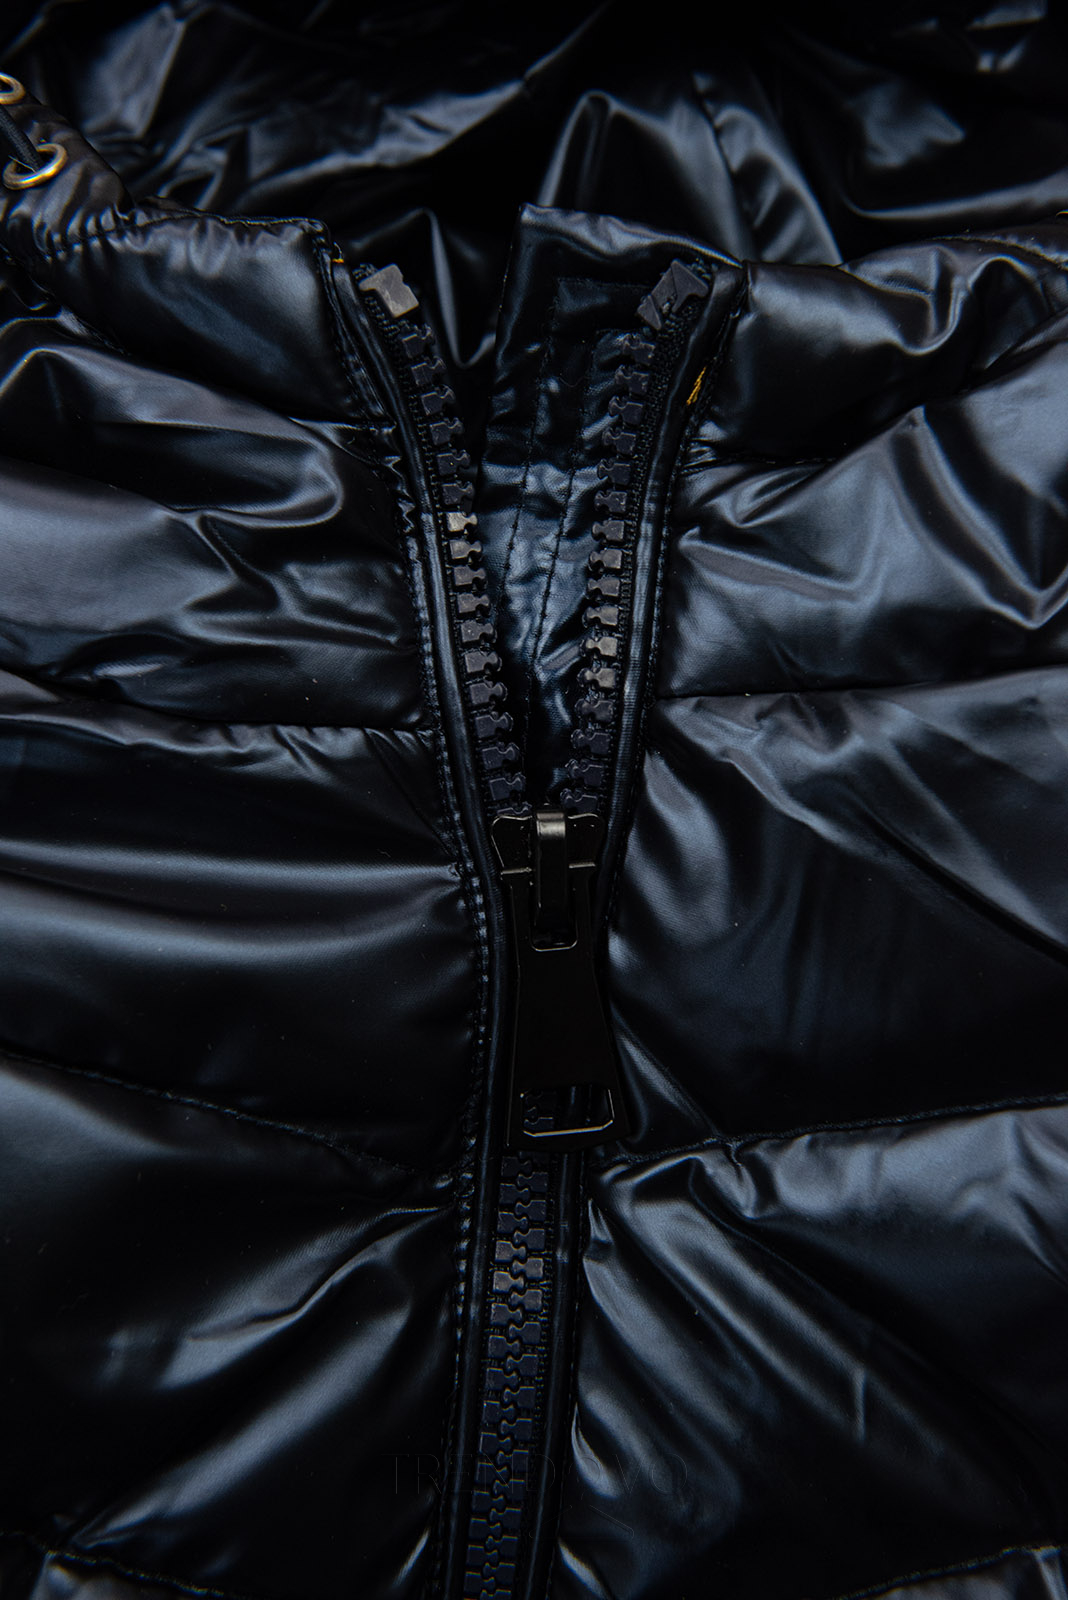 Tmavomodrá lesklá zimná bunda s odnímateľnou kožušinou